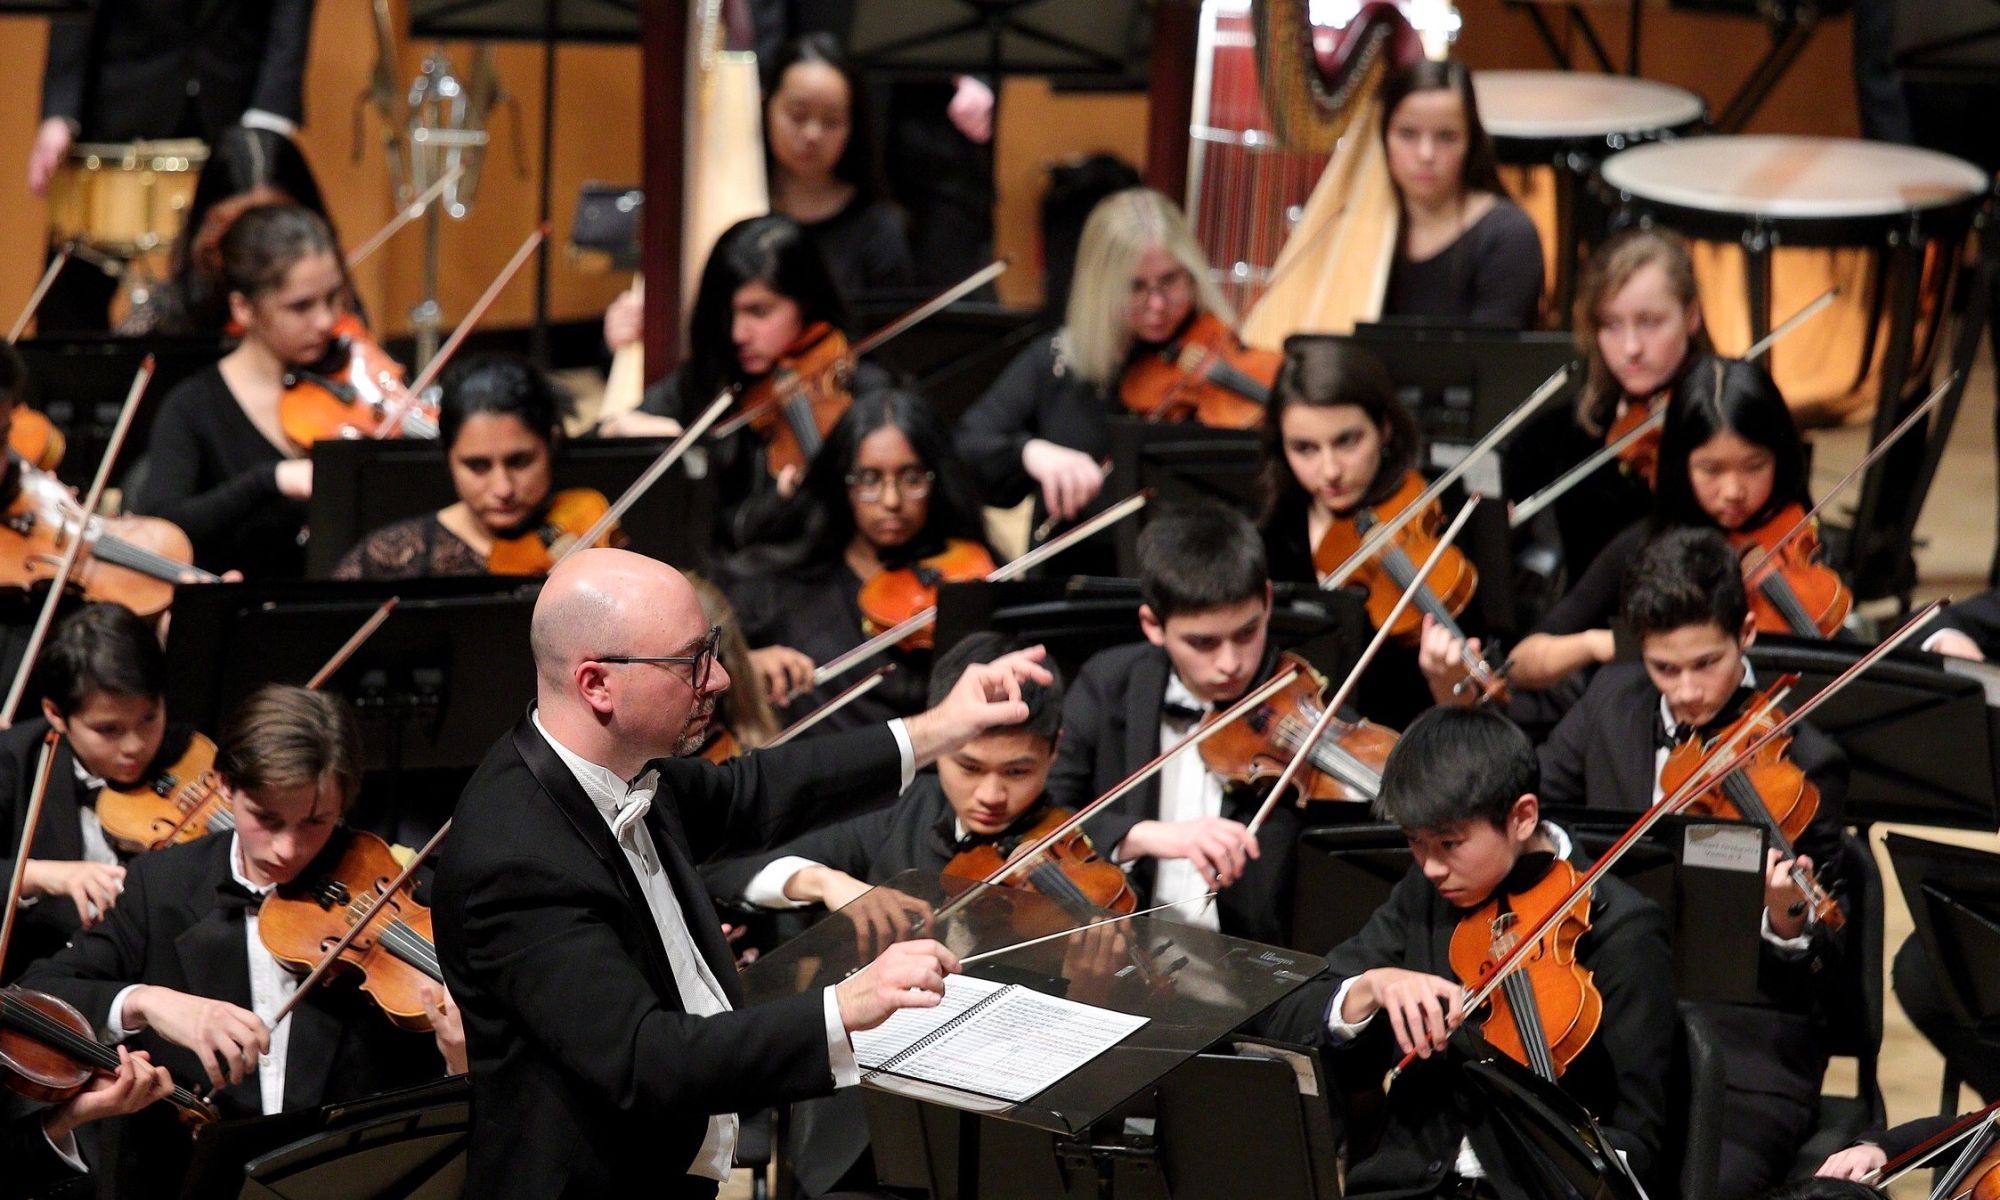 Conductor Michael Mascari instructing students playing instruments